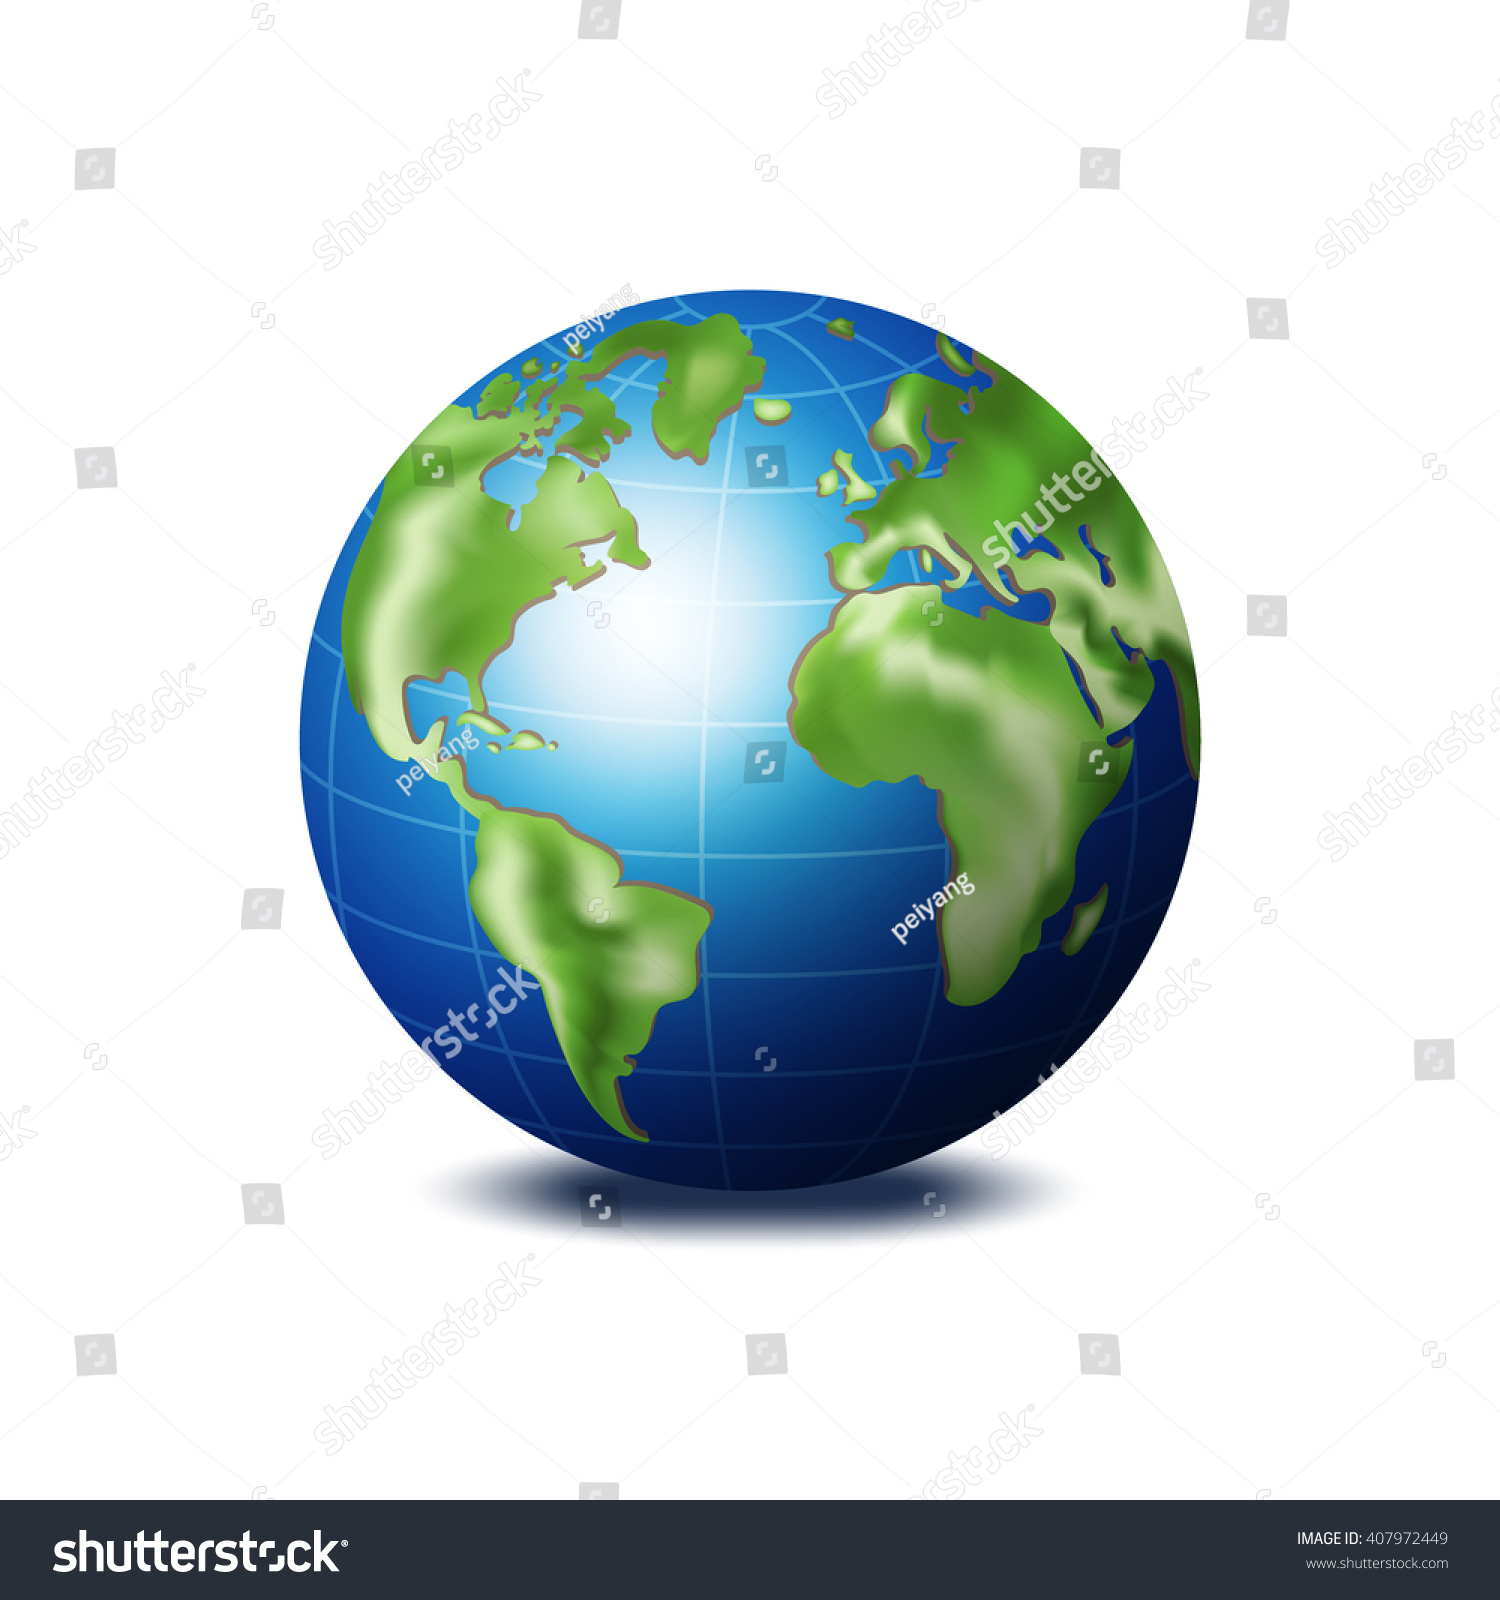 Download 3d View Earth World Globe Vector Stock Vector 407972449 - Shutterstock